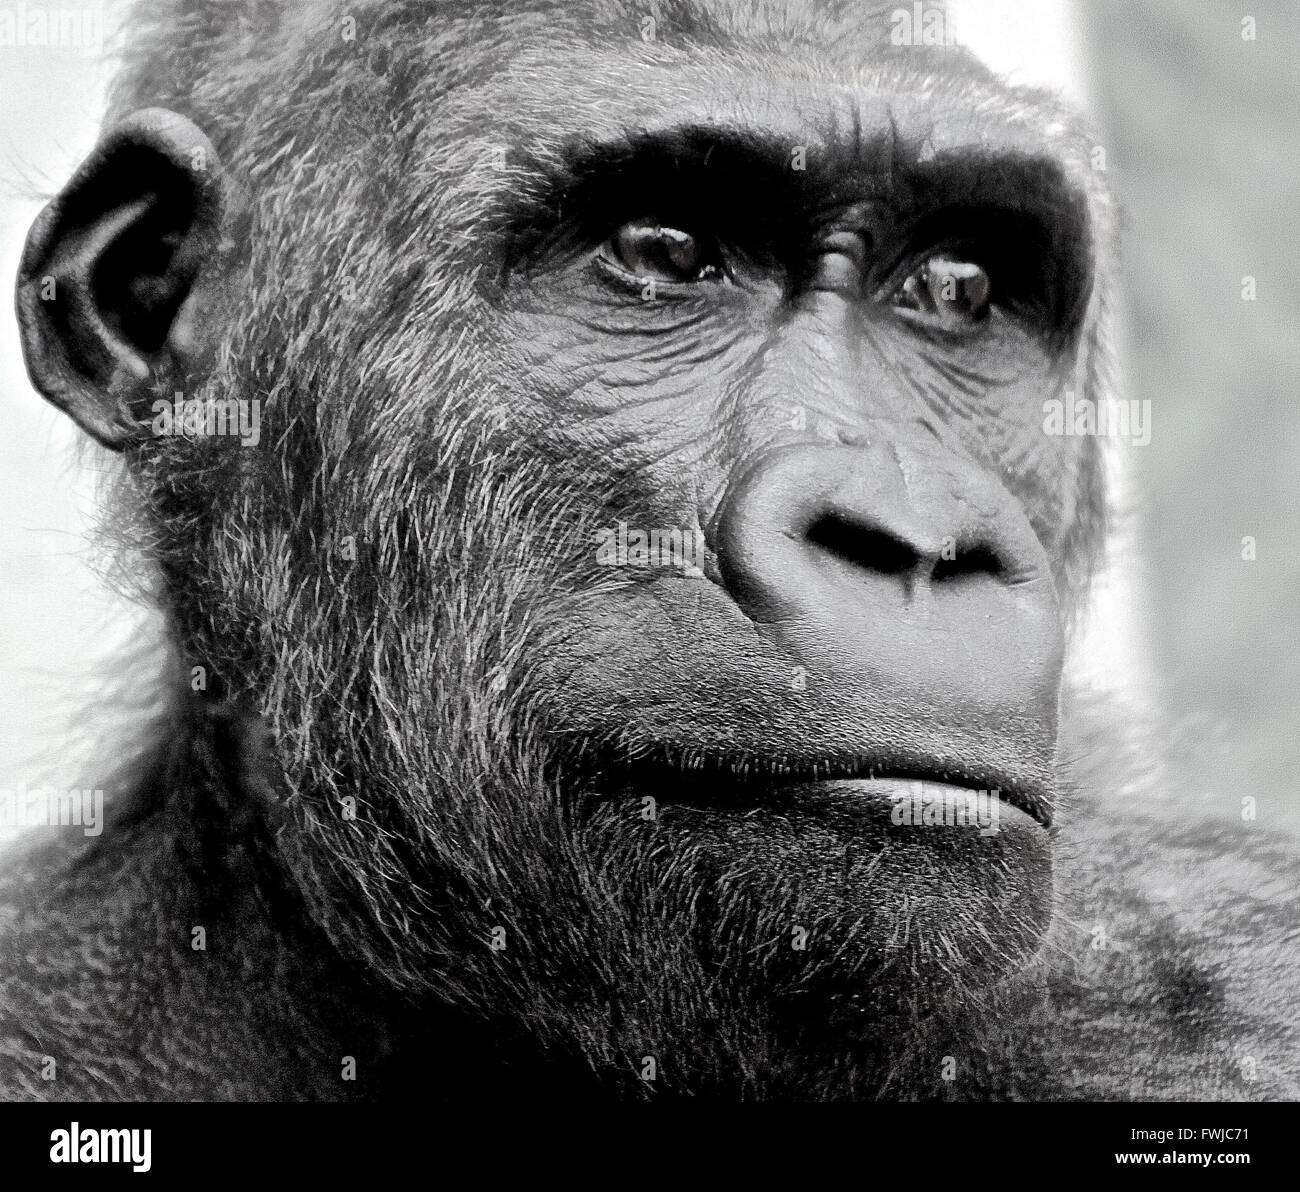 Close-Up Of Gorilla Looking Away Stock Photo